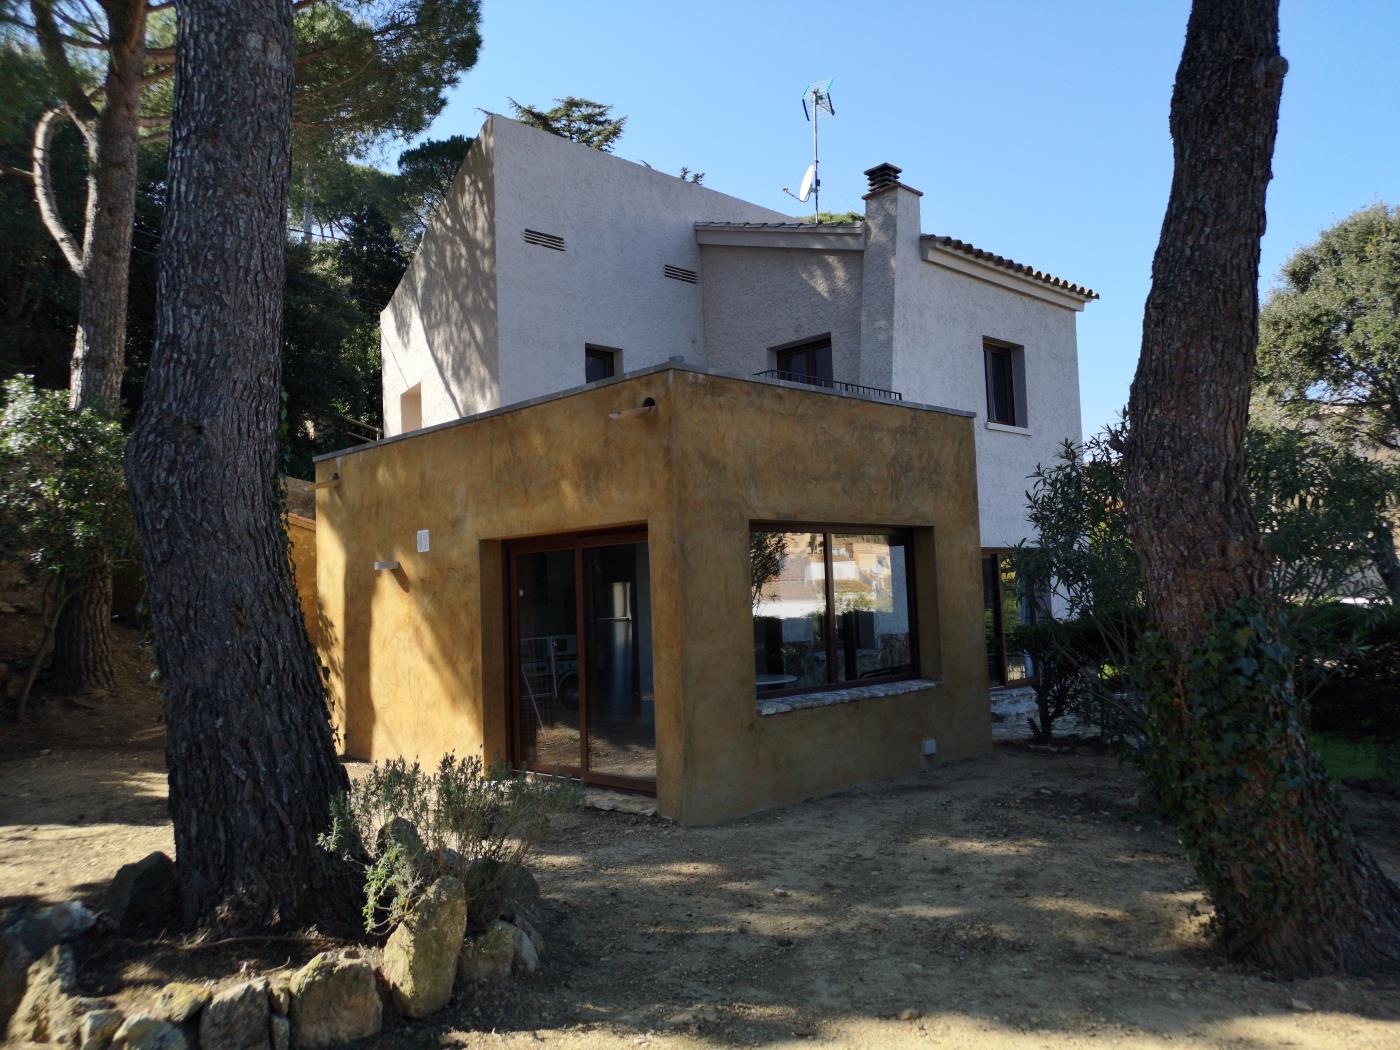 Casa Can Pau (Center) in Begur